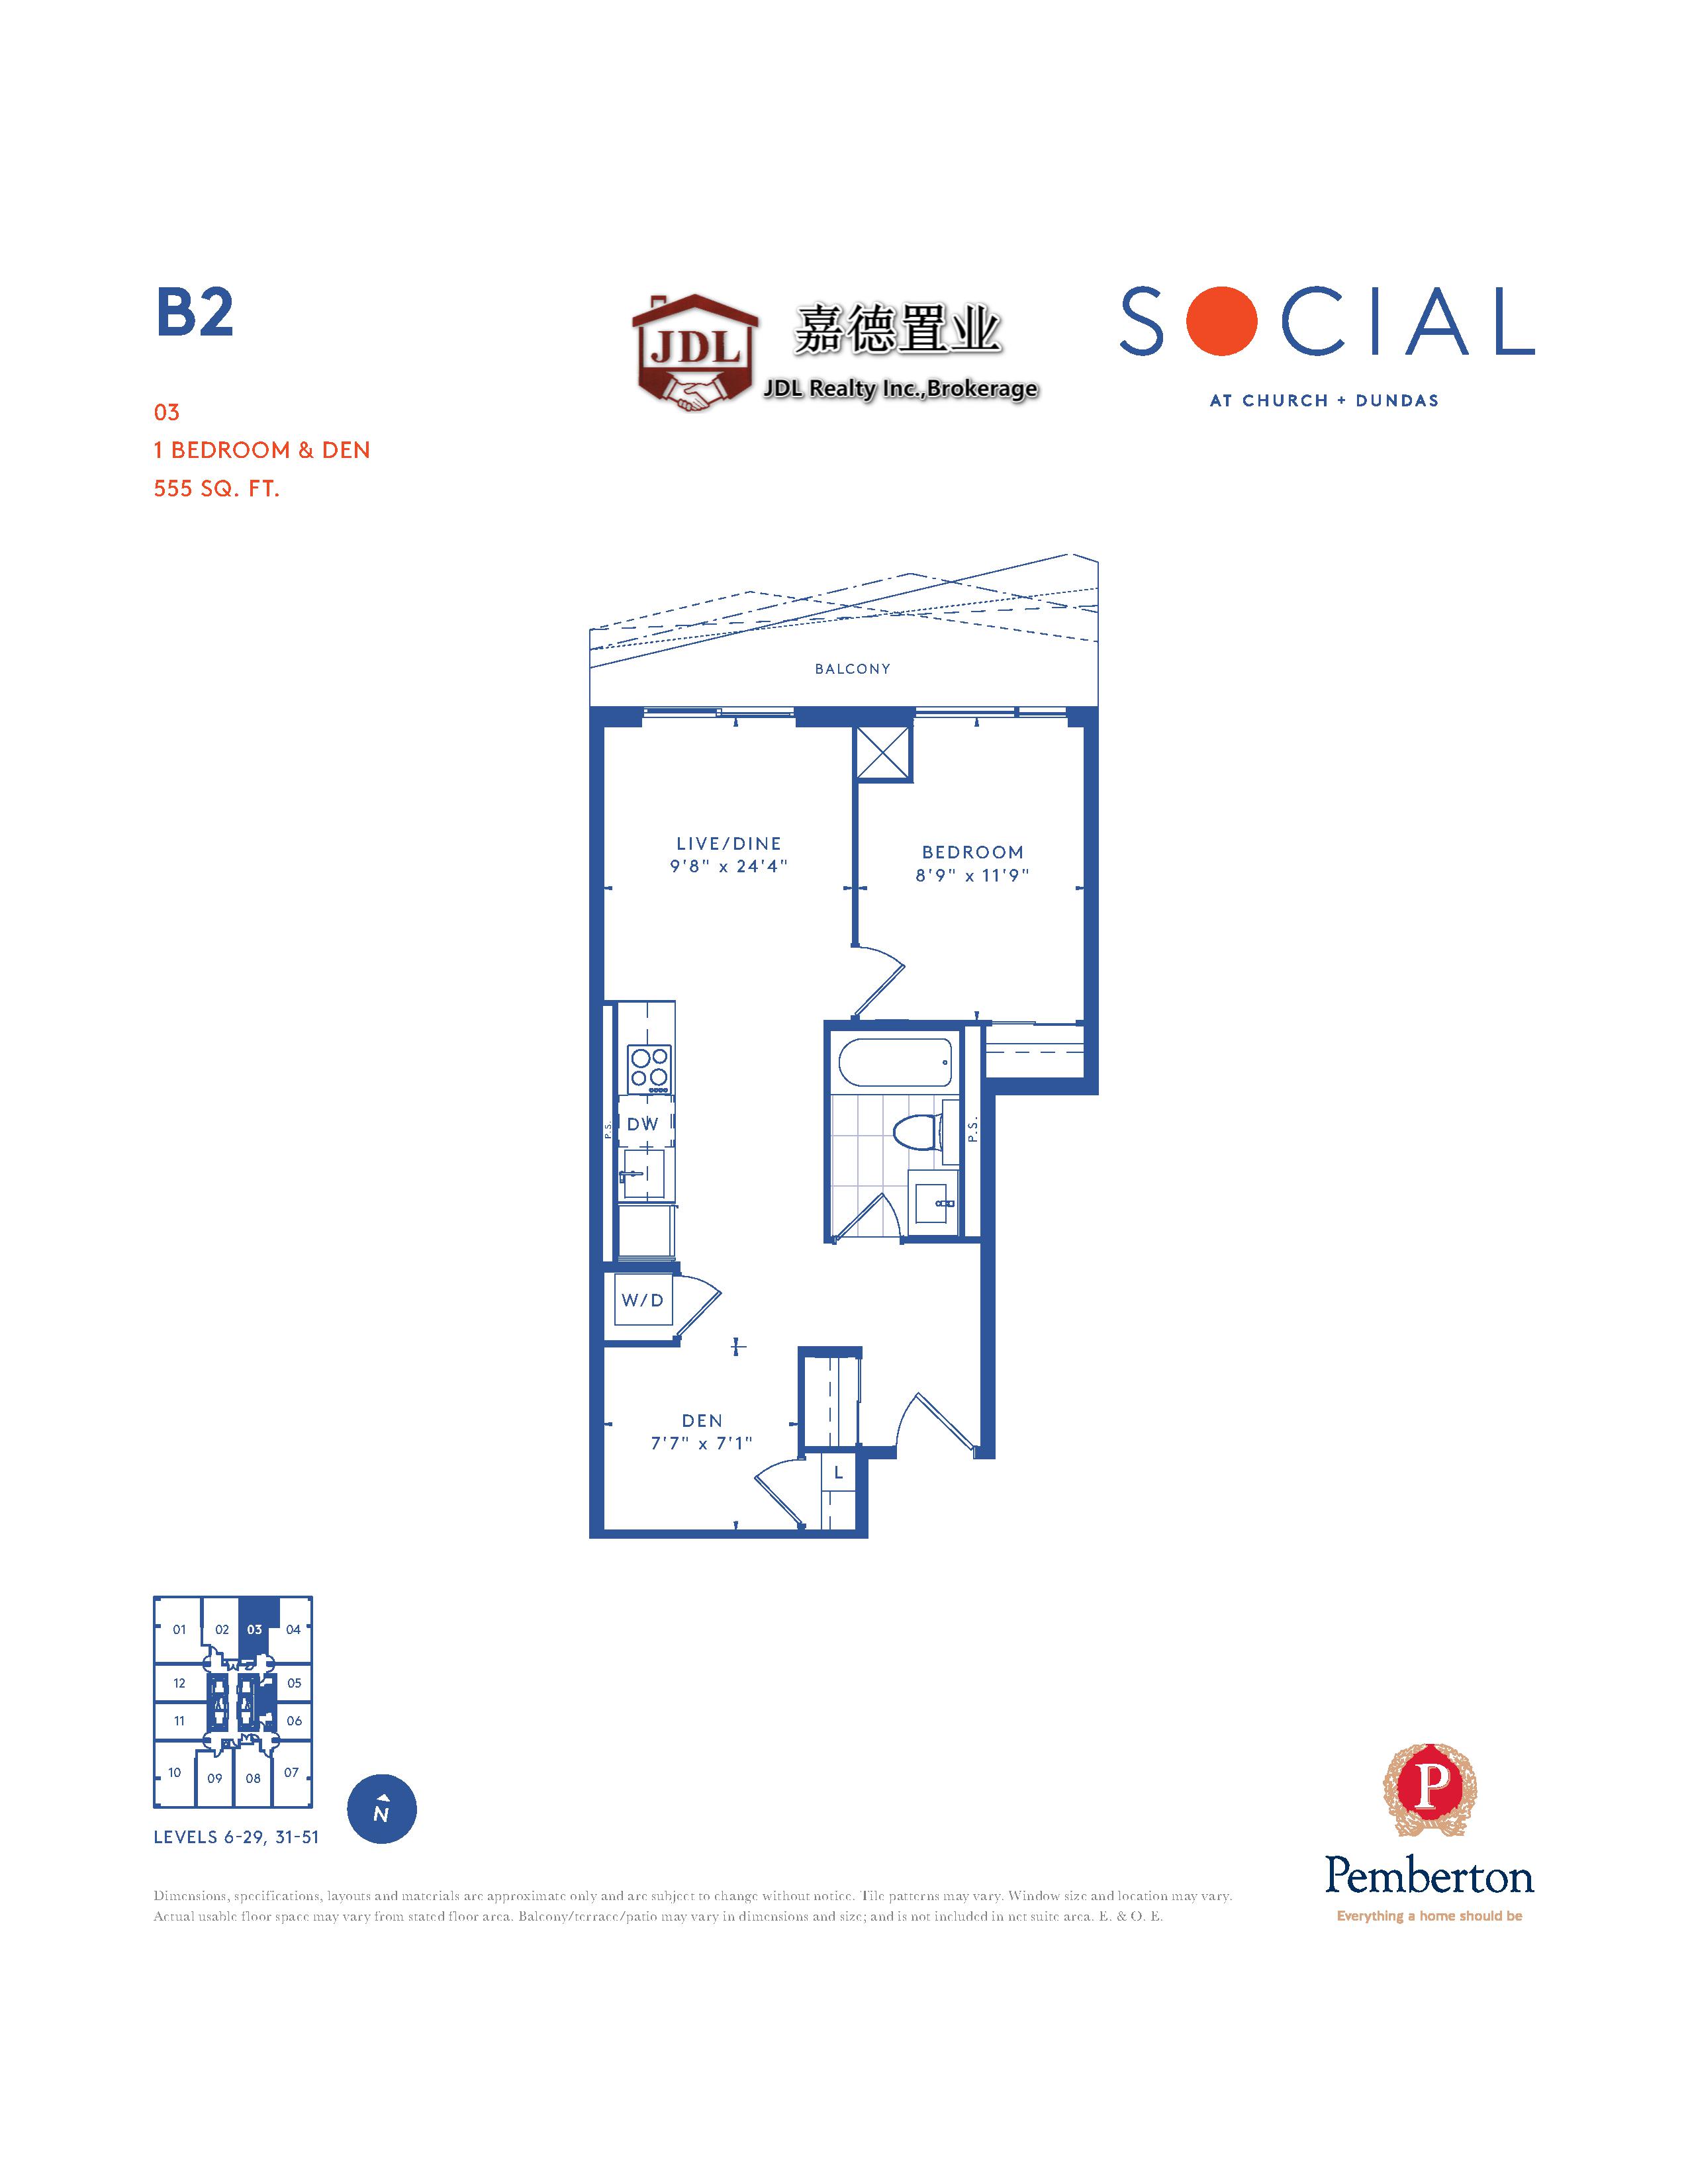 Social Tower floor plan 1 4